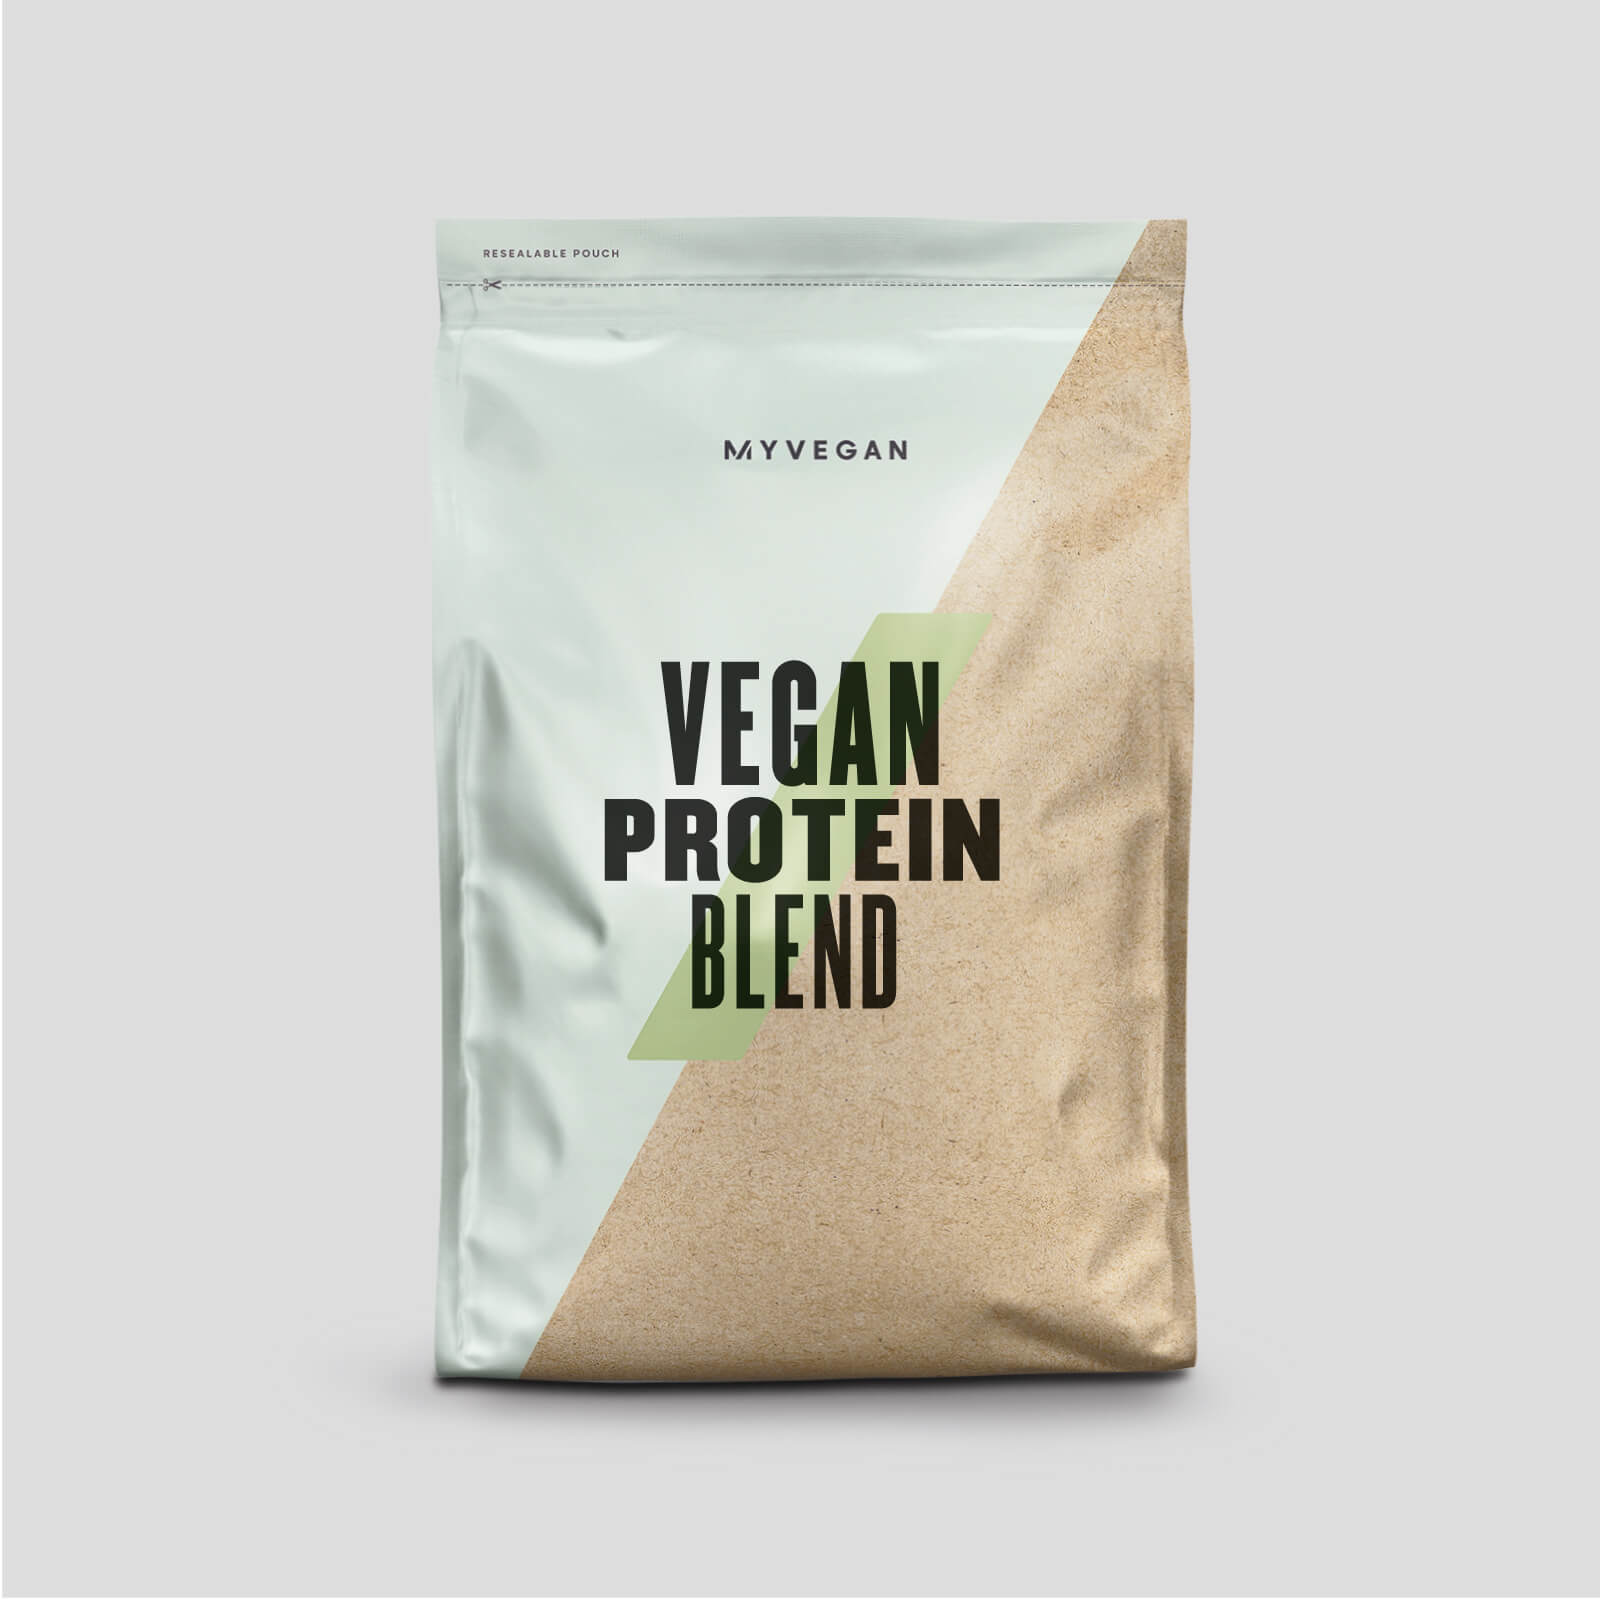 Myvegan Vegan Protein Blend - 1kg - Cacao Orange